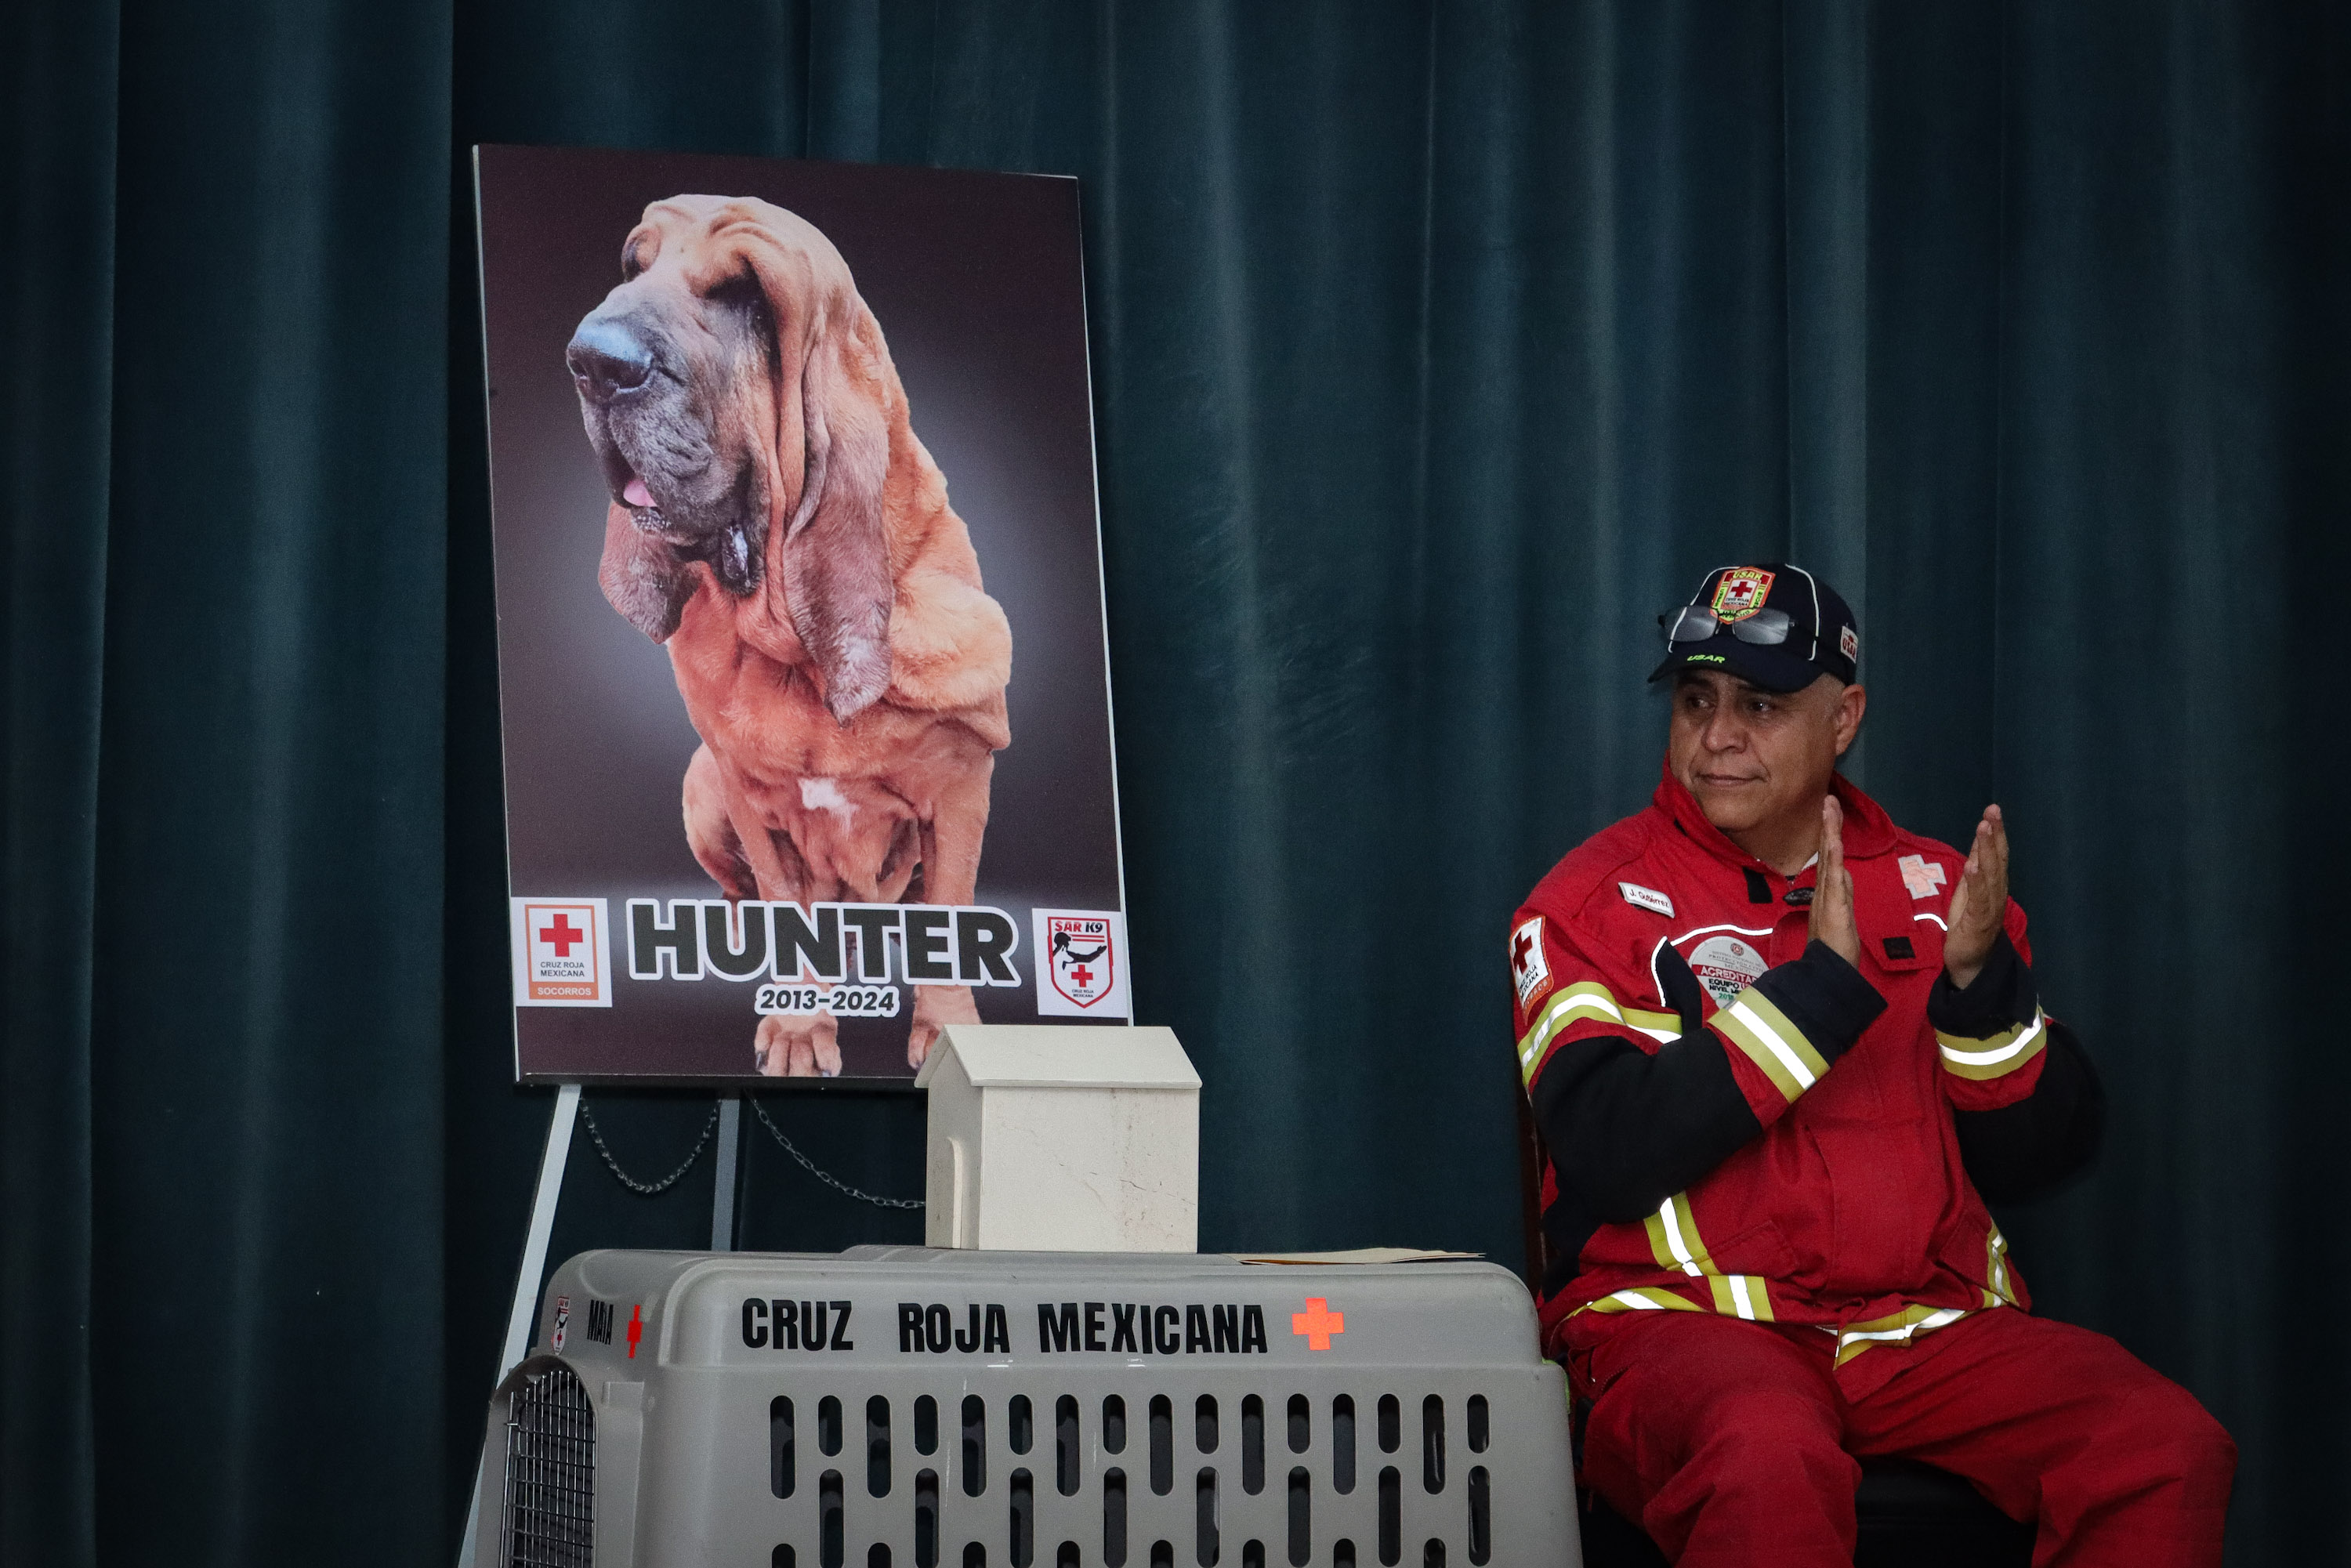 Cruz Roja realiza homenaje póstumo de Hunter